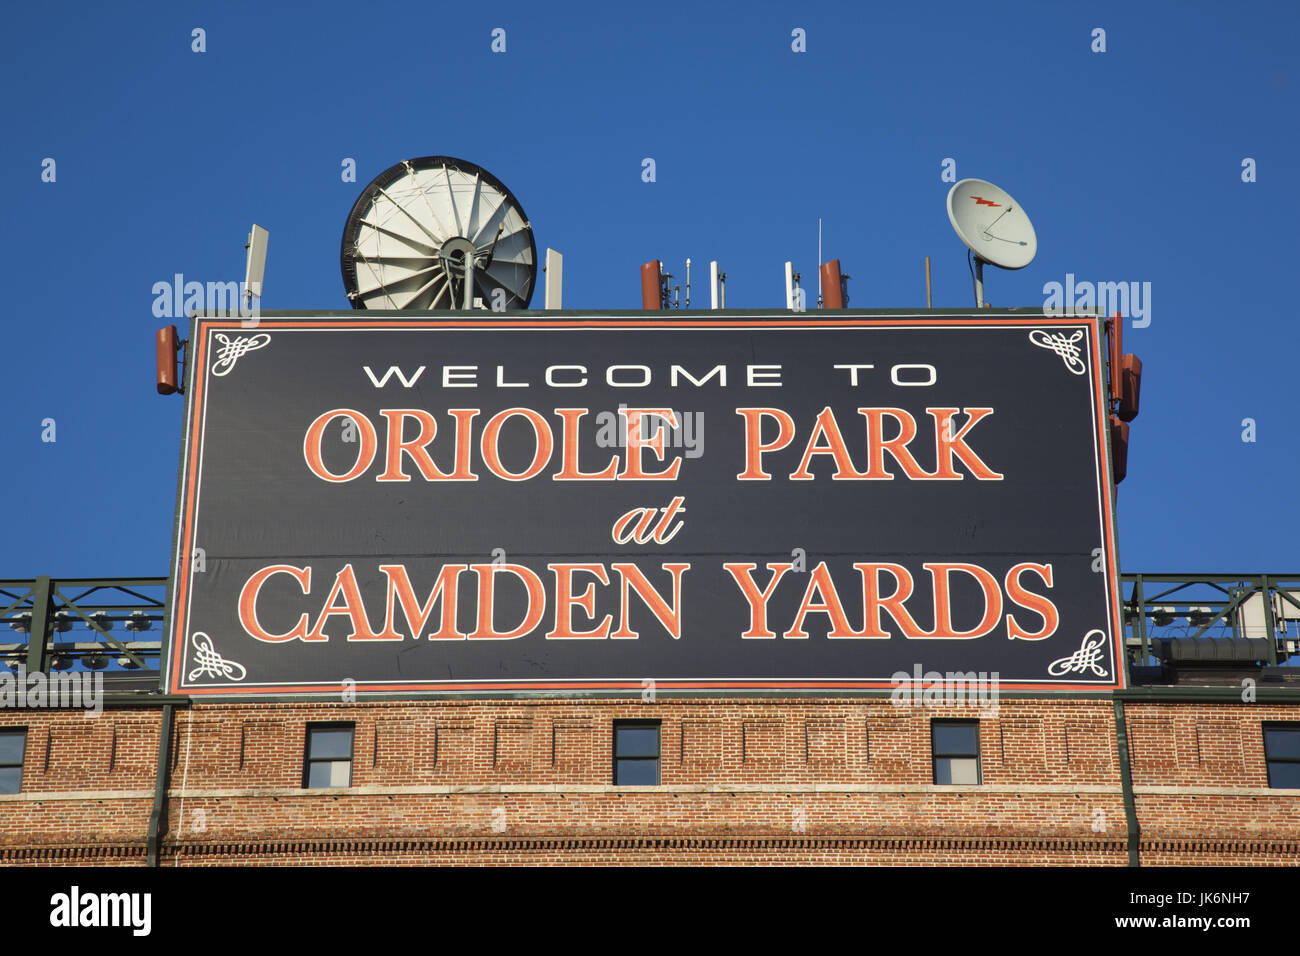 USA, Maryland, Baltimore, l'Oriole Park at Camden Yards, Baseball Stadium, domicile des orioles de Baltimore Banque D'Images